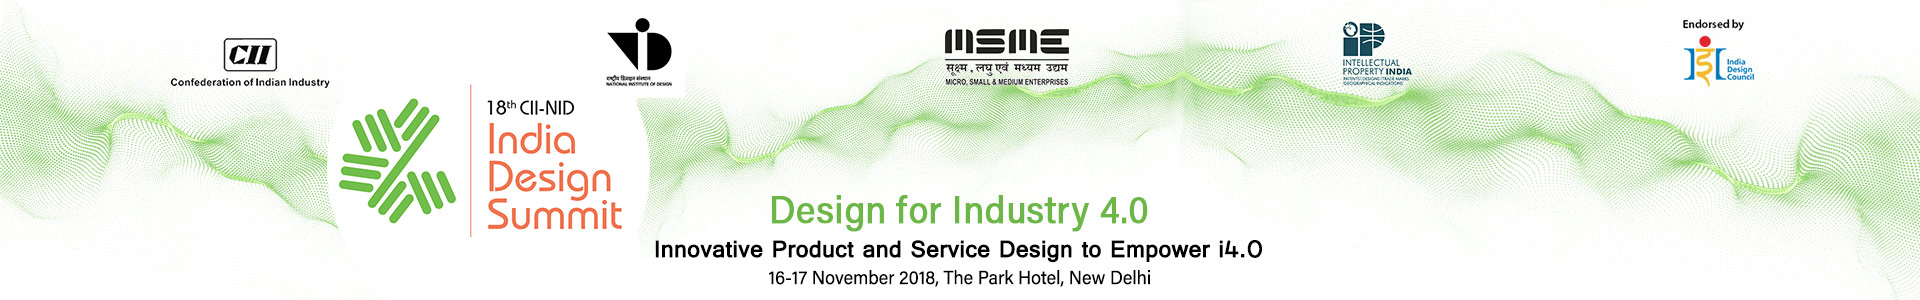 india-design-summit-2018-inner-banner